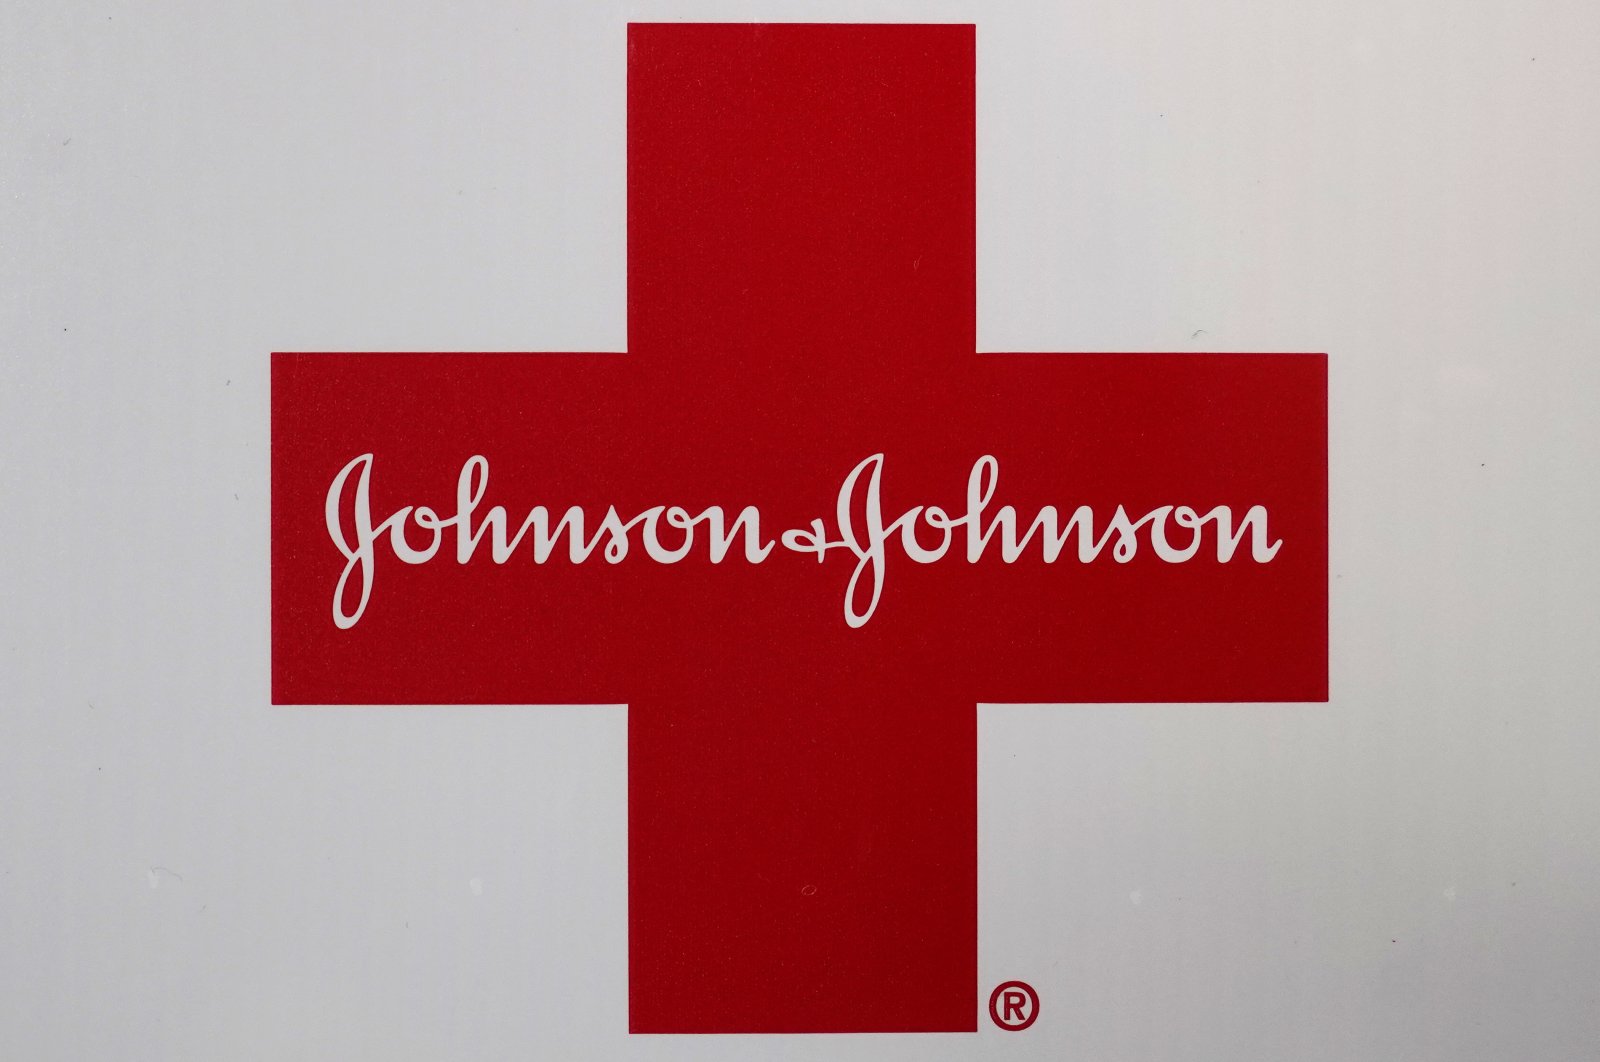 A Johnson & Johnson logo is seen on the exterior of a first aid kit in Walpole, Massachusetts, U.S., Feb. 24, 2021. (AP Photo)